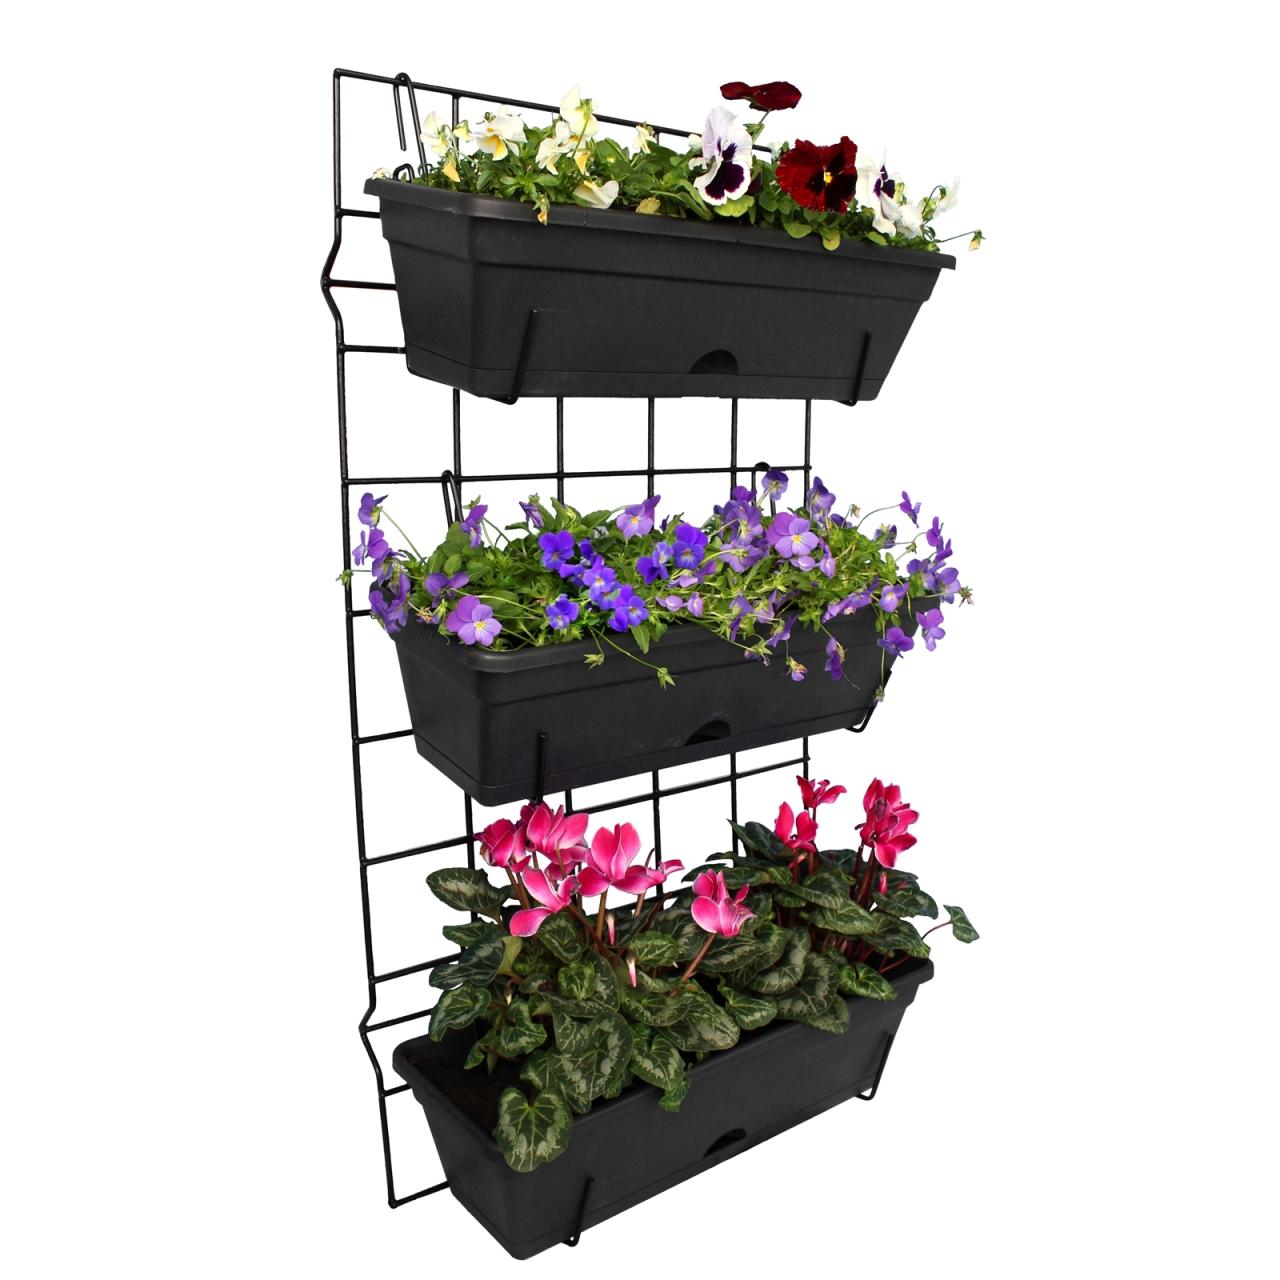 Hanging Plants Indoor | Bunnings Hanging Pots Wall: A Guide to Vertical Gardening